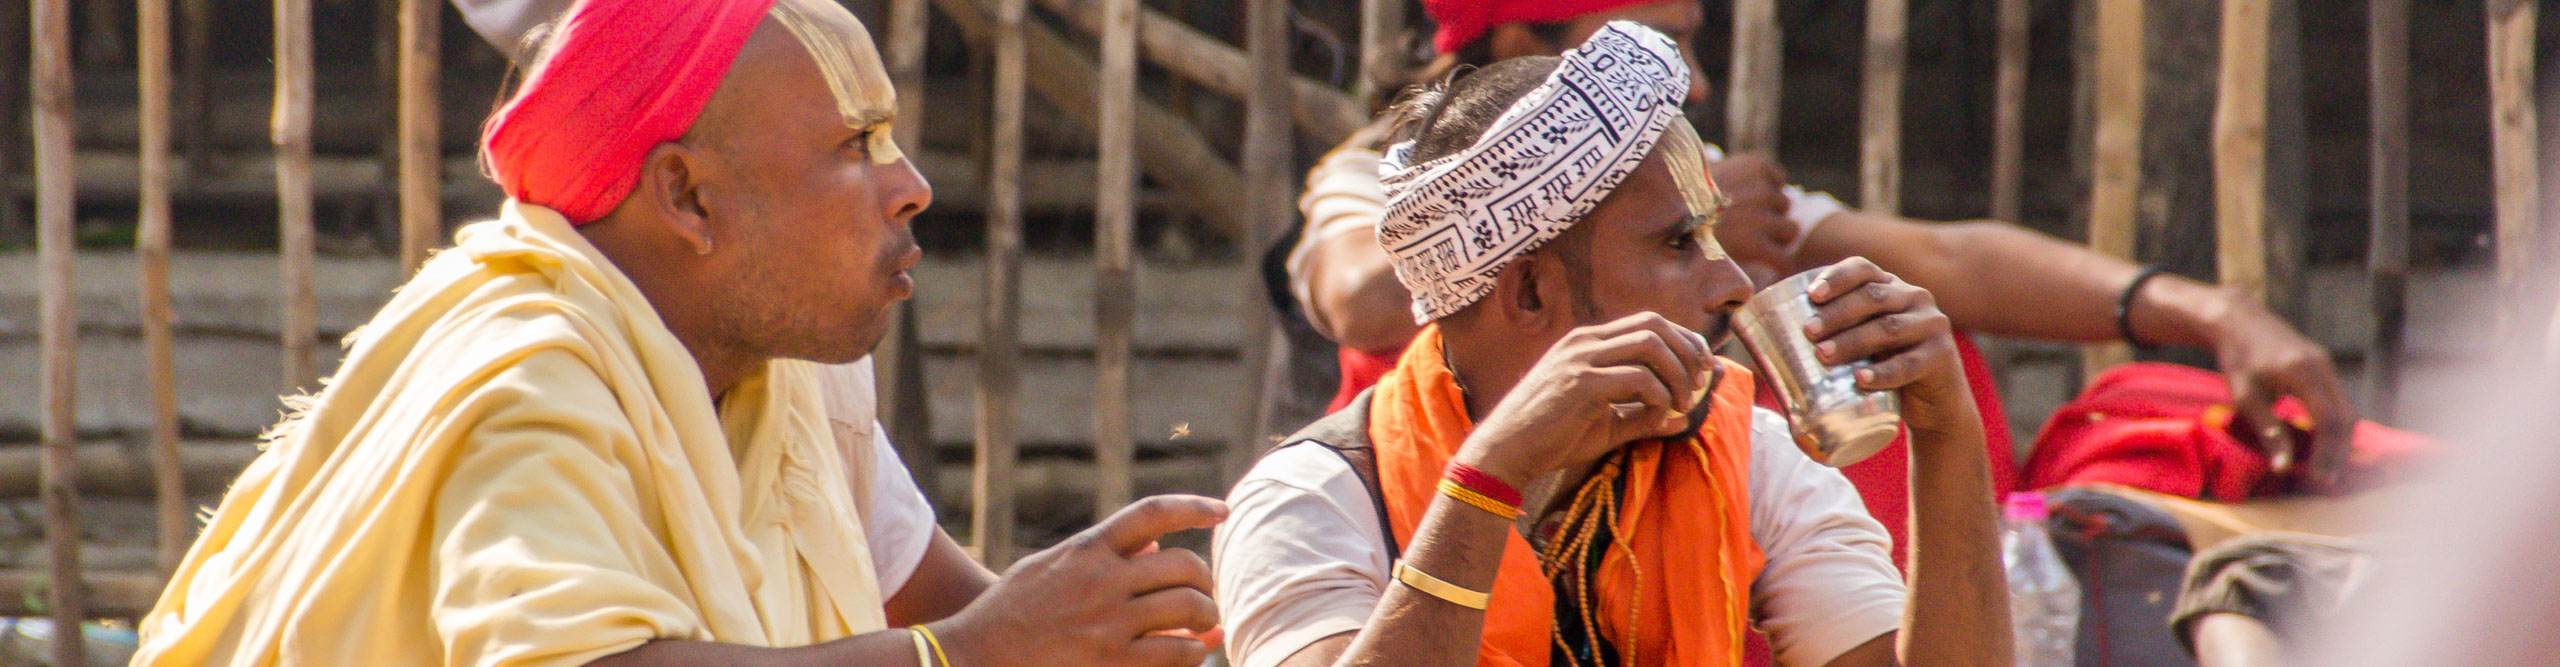 Local men drinking tea wearing traditional dress in Varanasi, India 